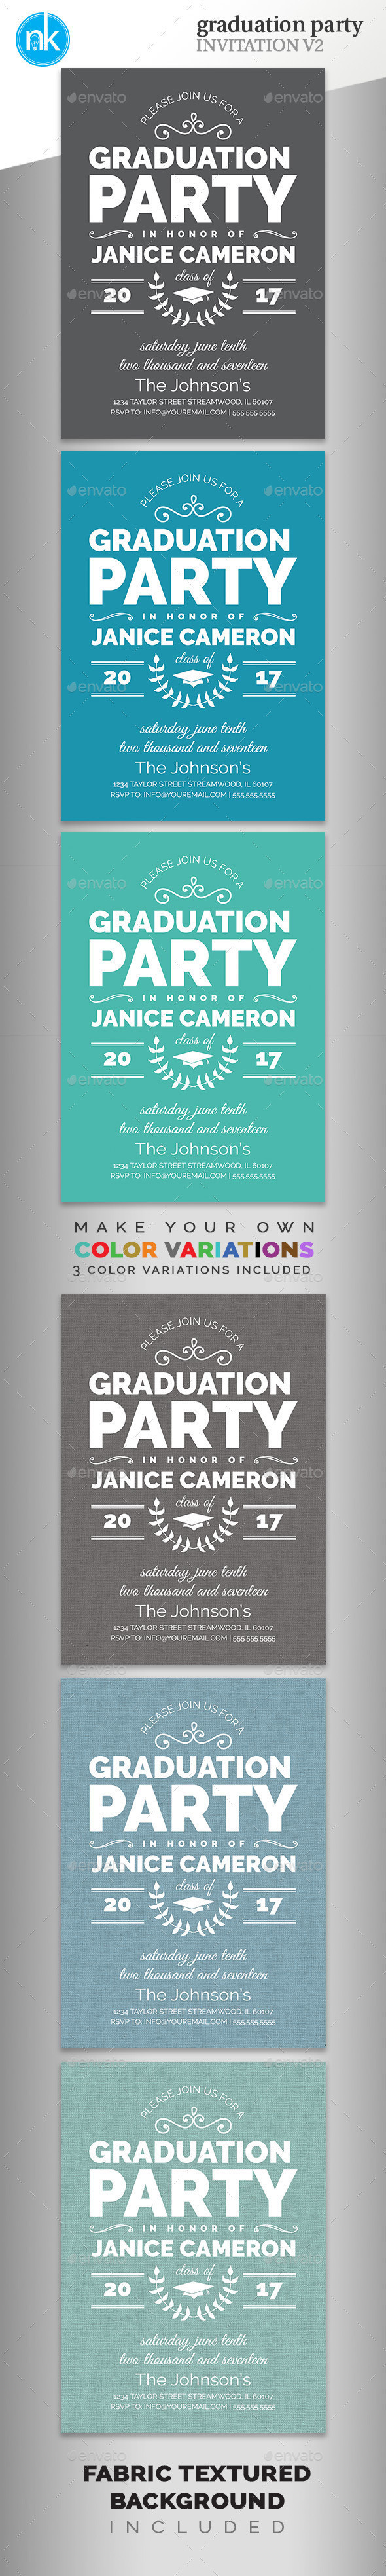 Graduation party invitationv2 preview